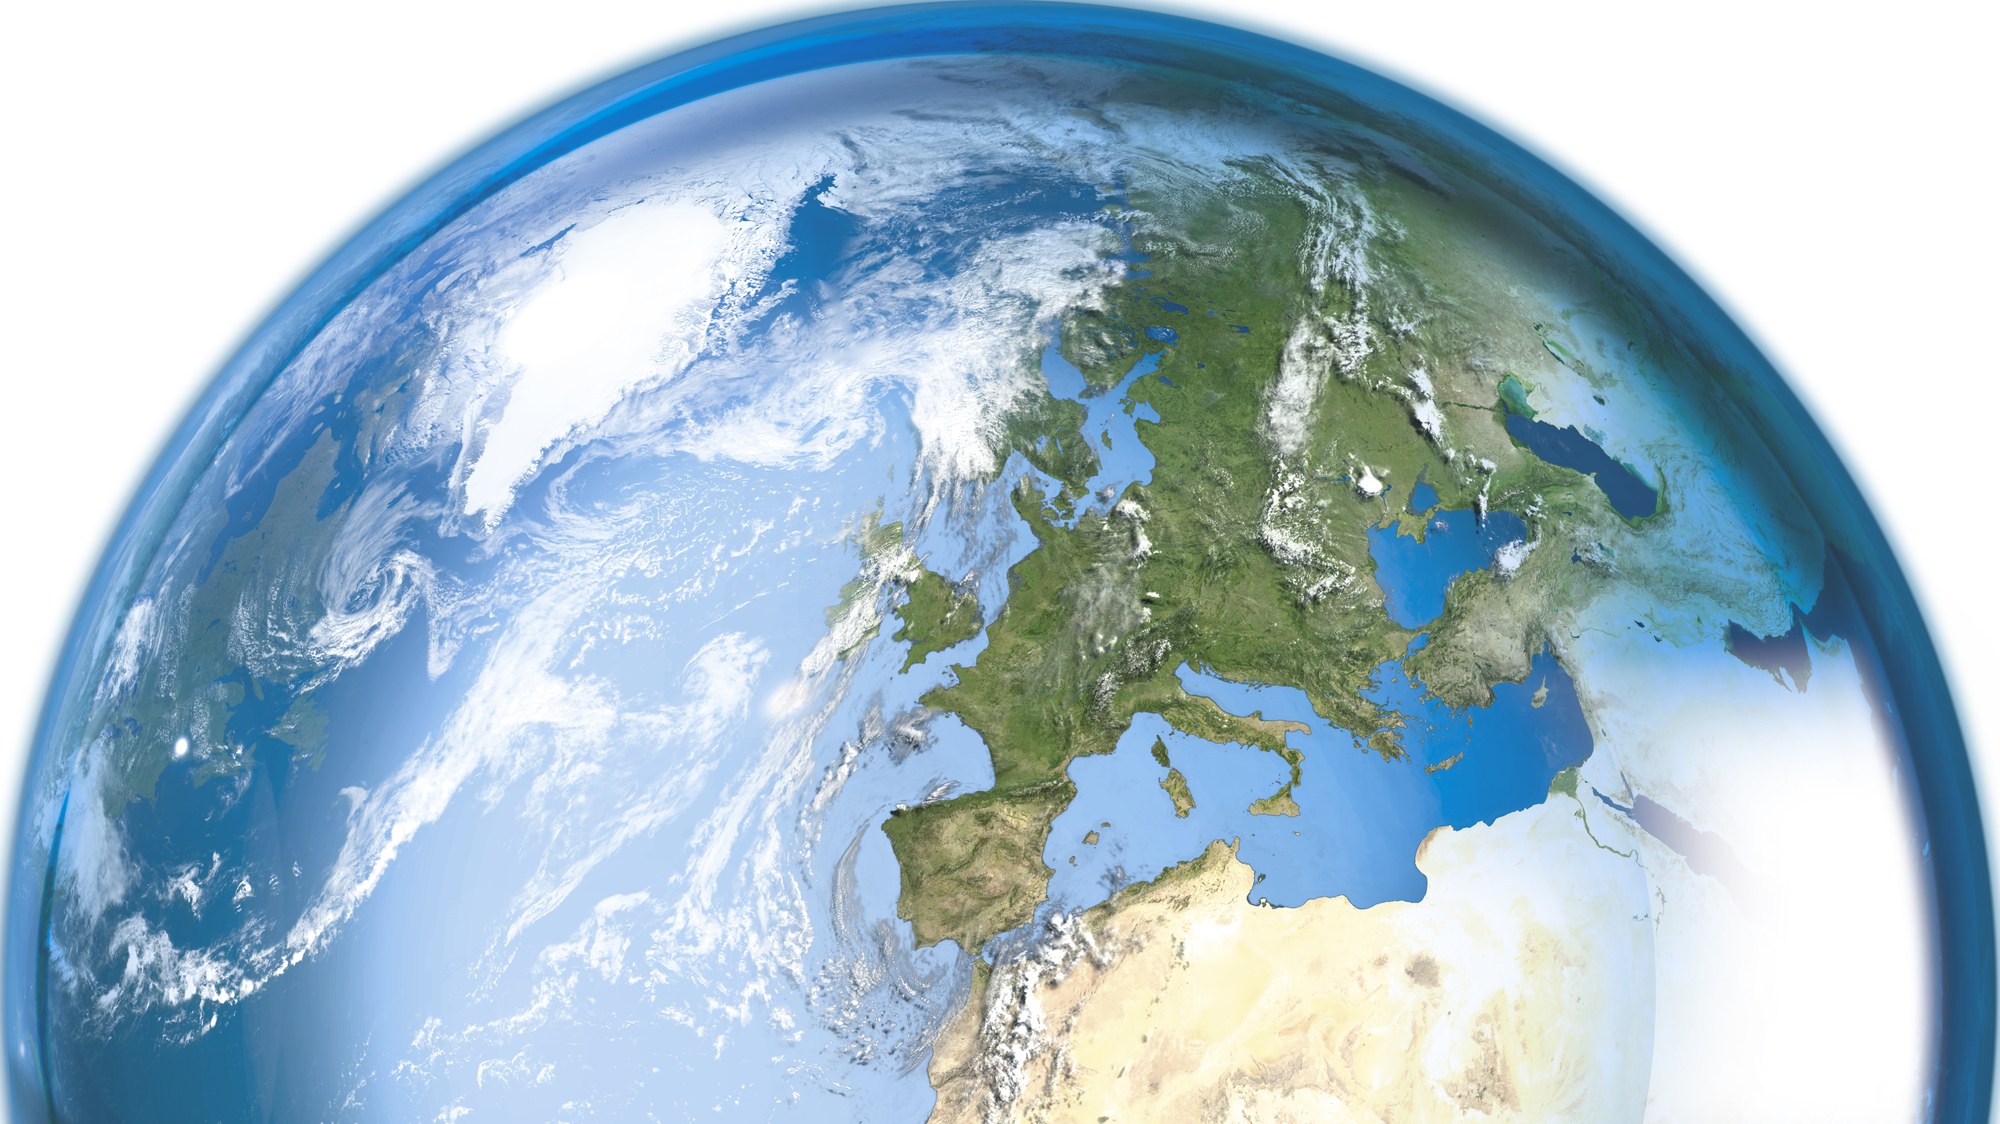 DLR Earth image